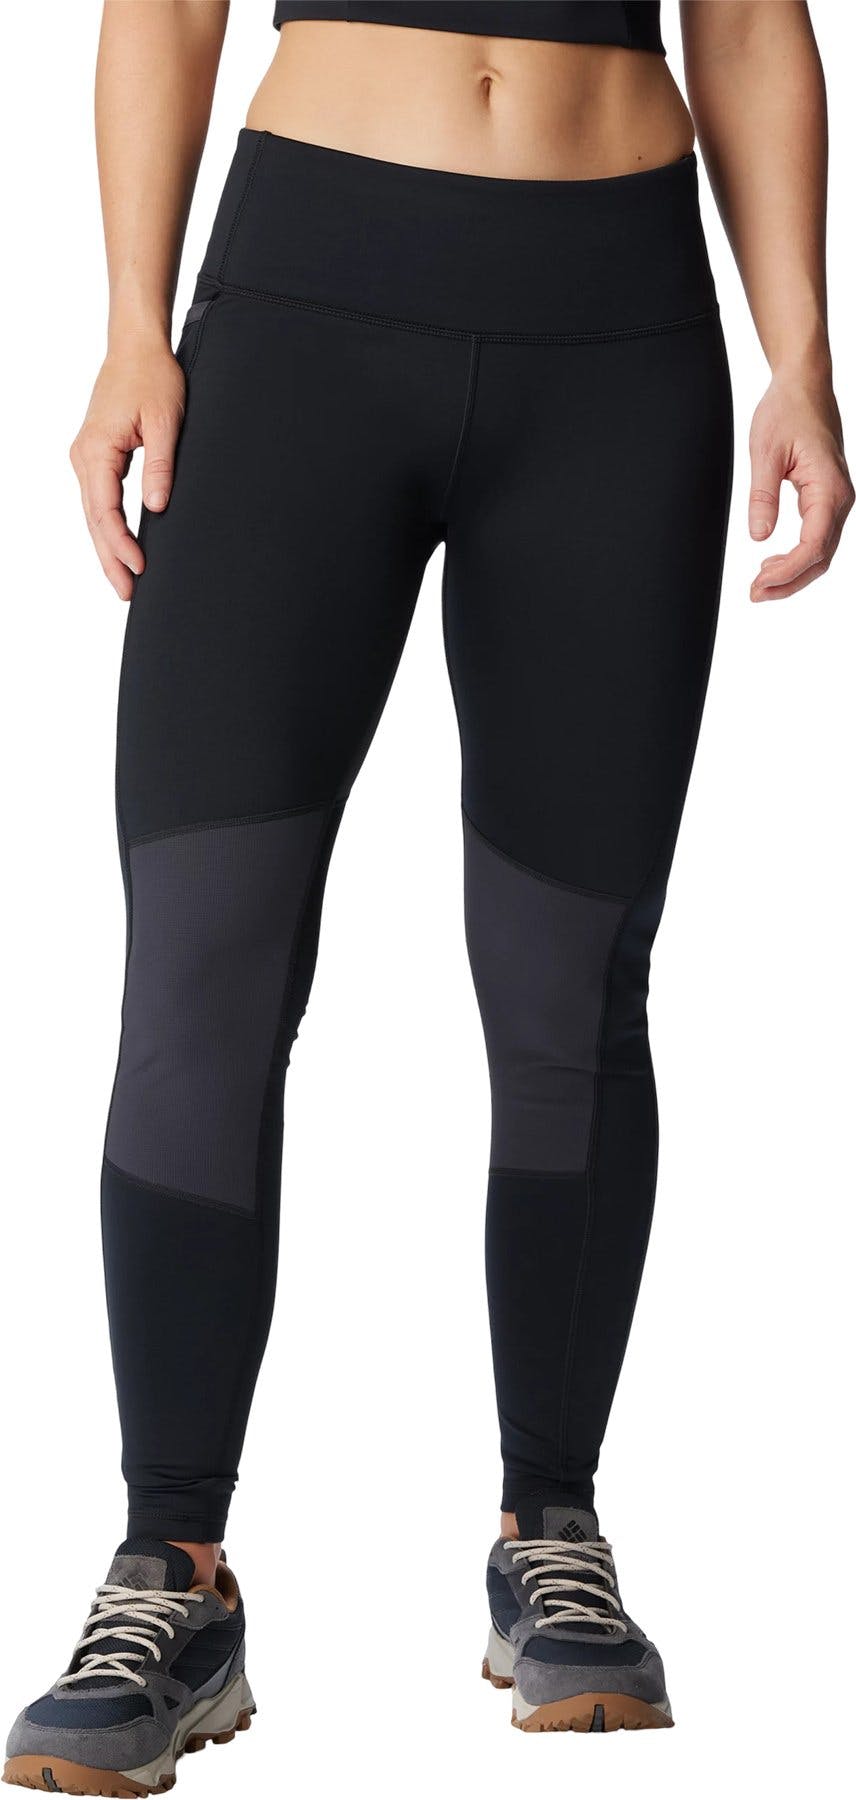 Product image for Back Beauty Warm Hybrid Leggings - Women's